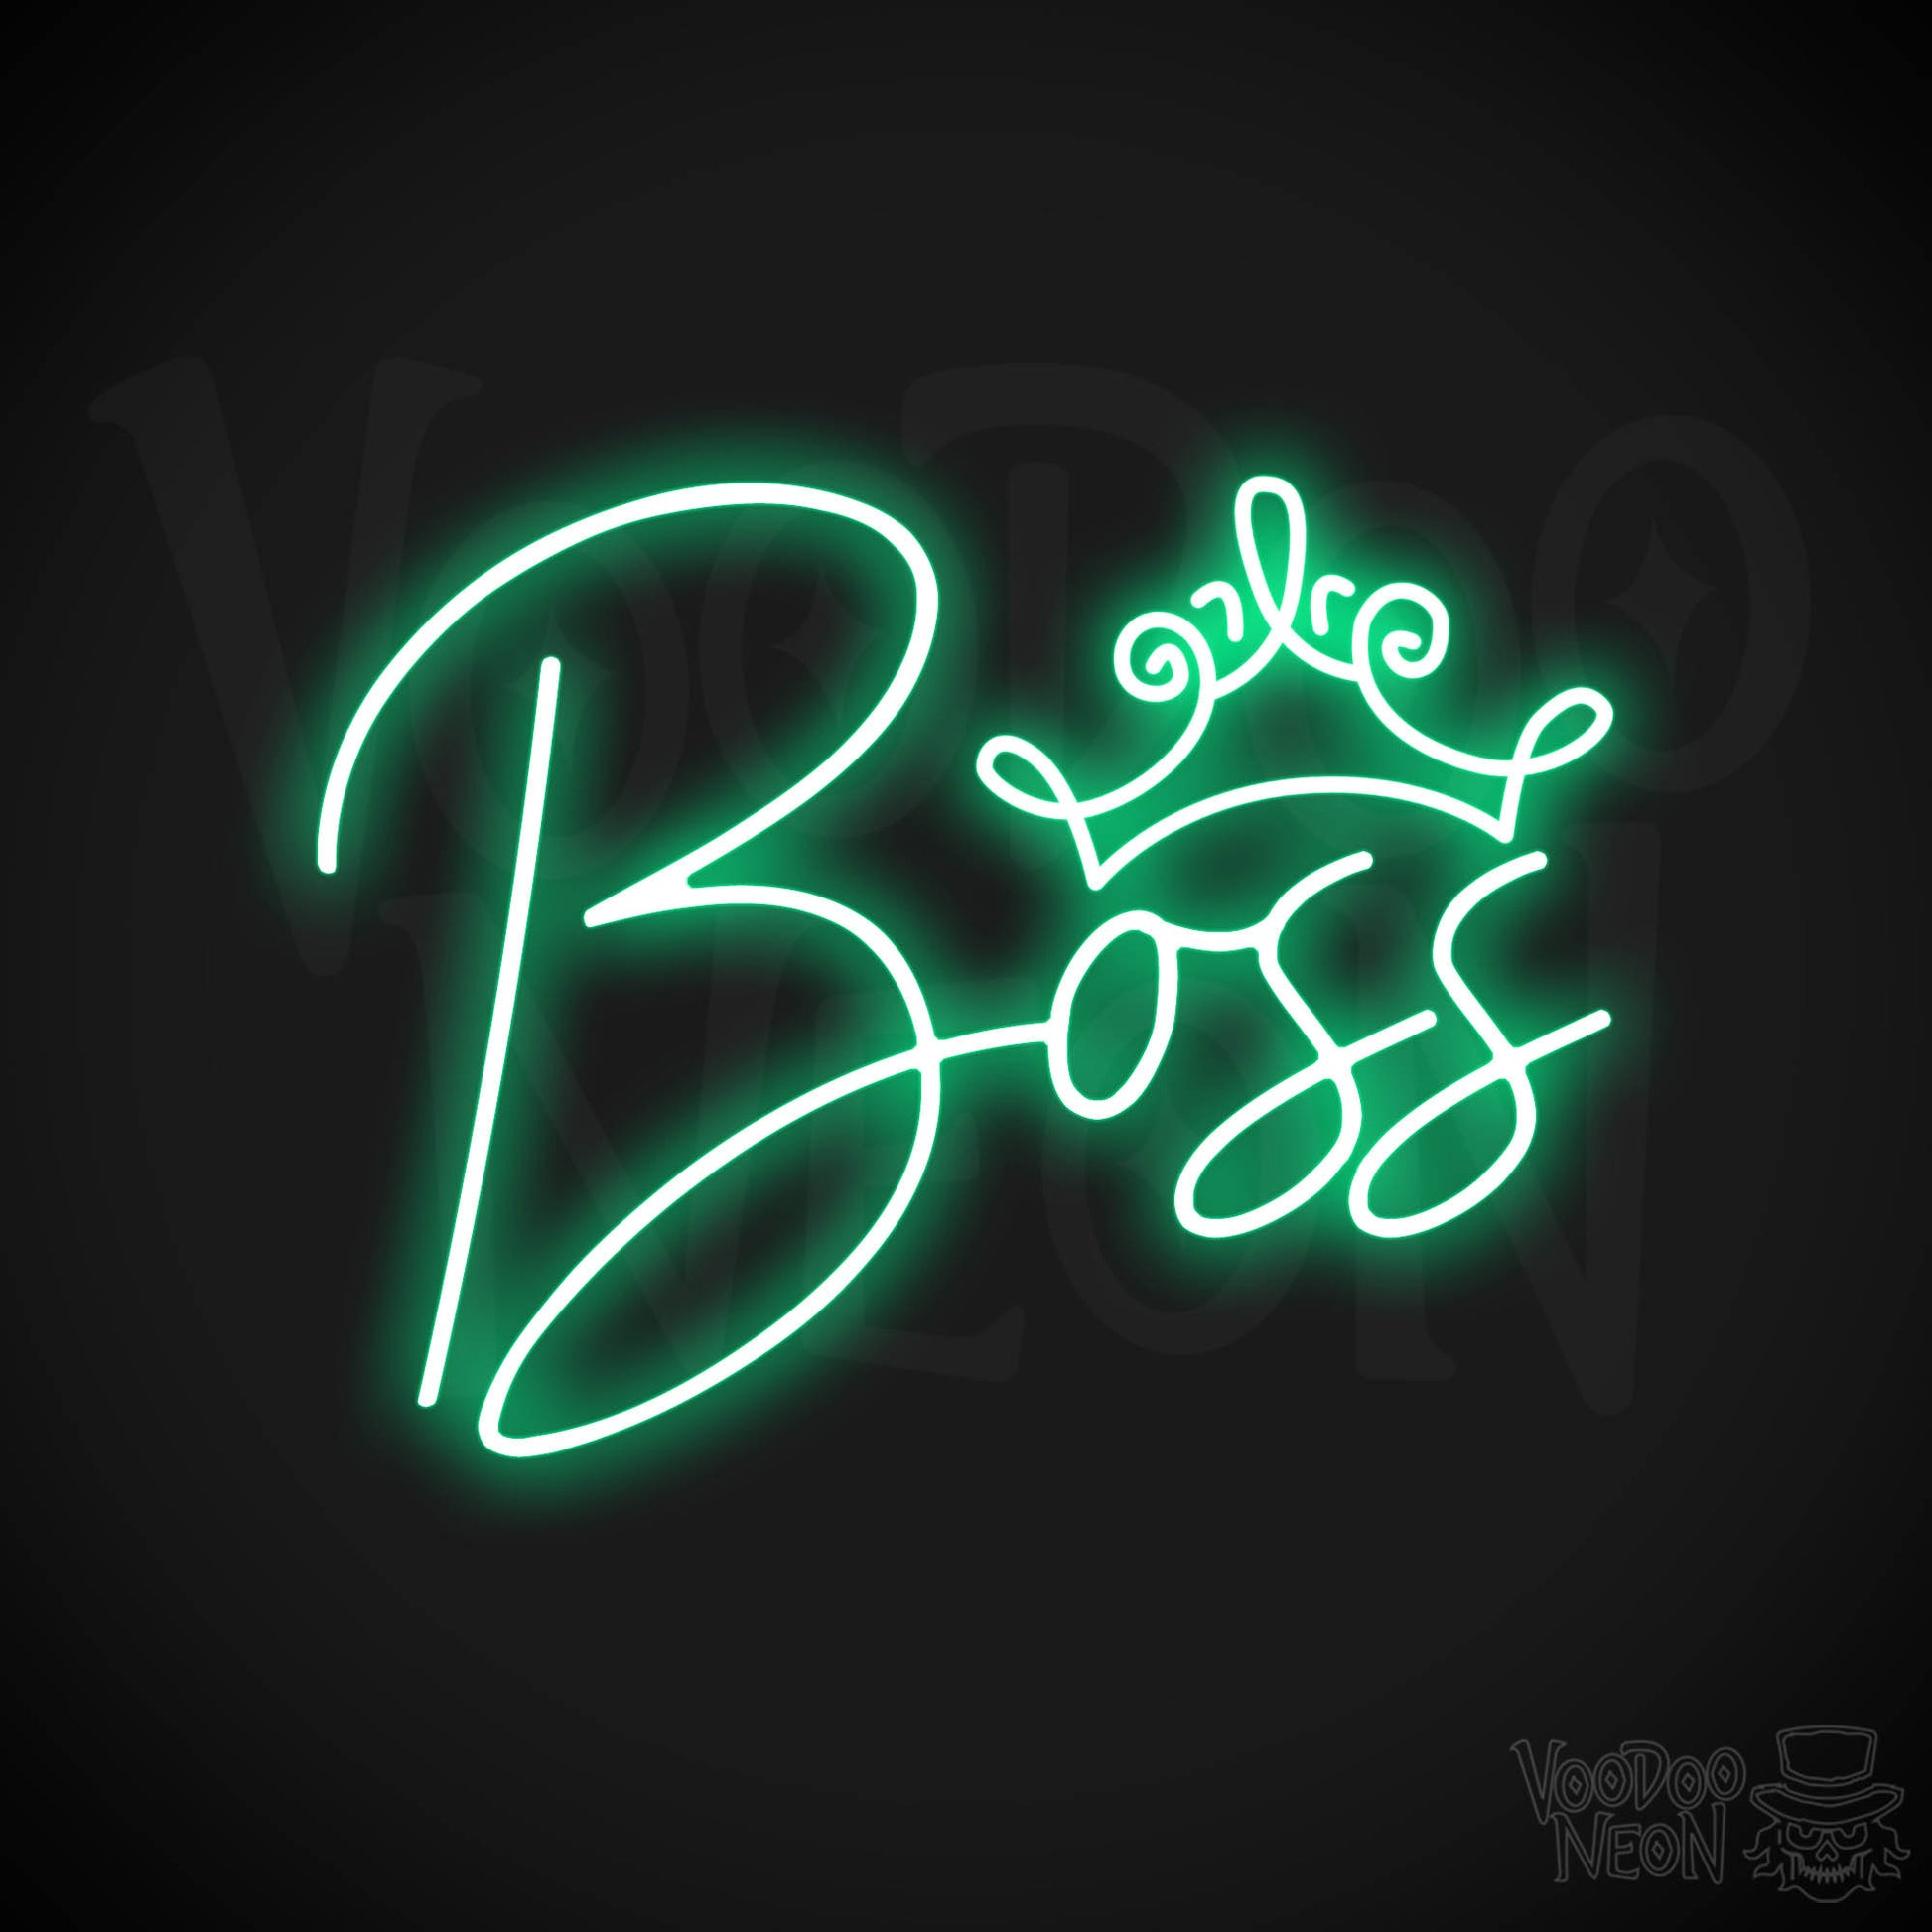 Boss Woman LED Neon - Green